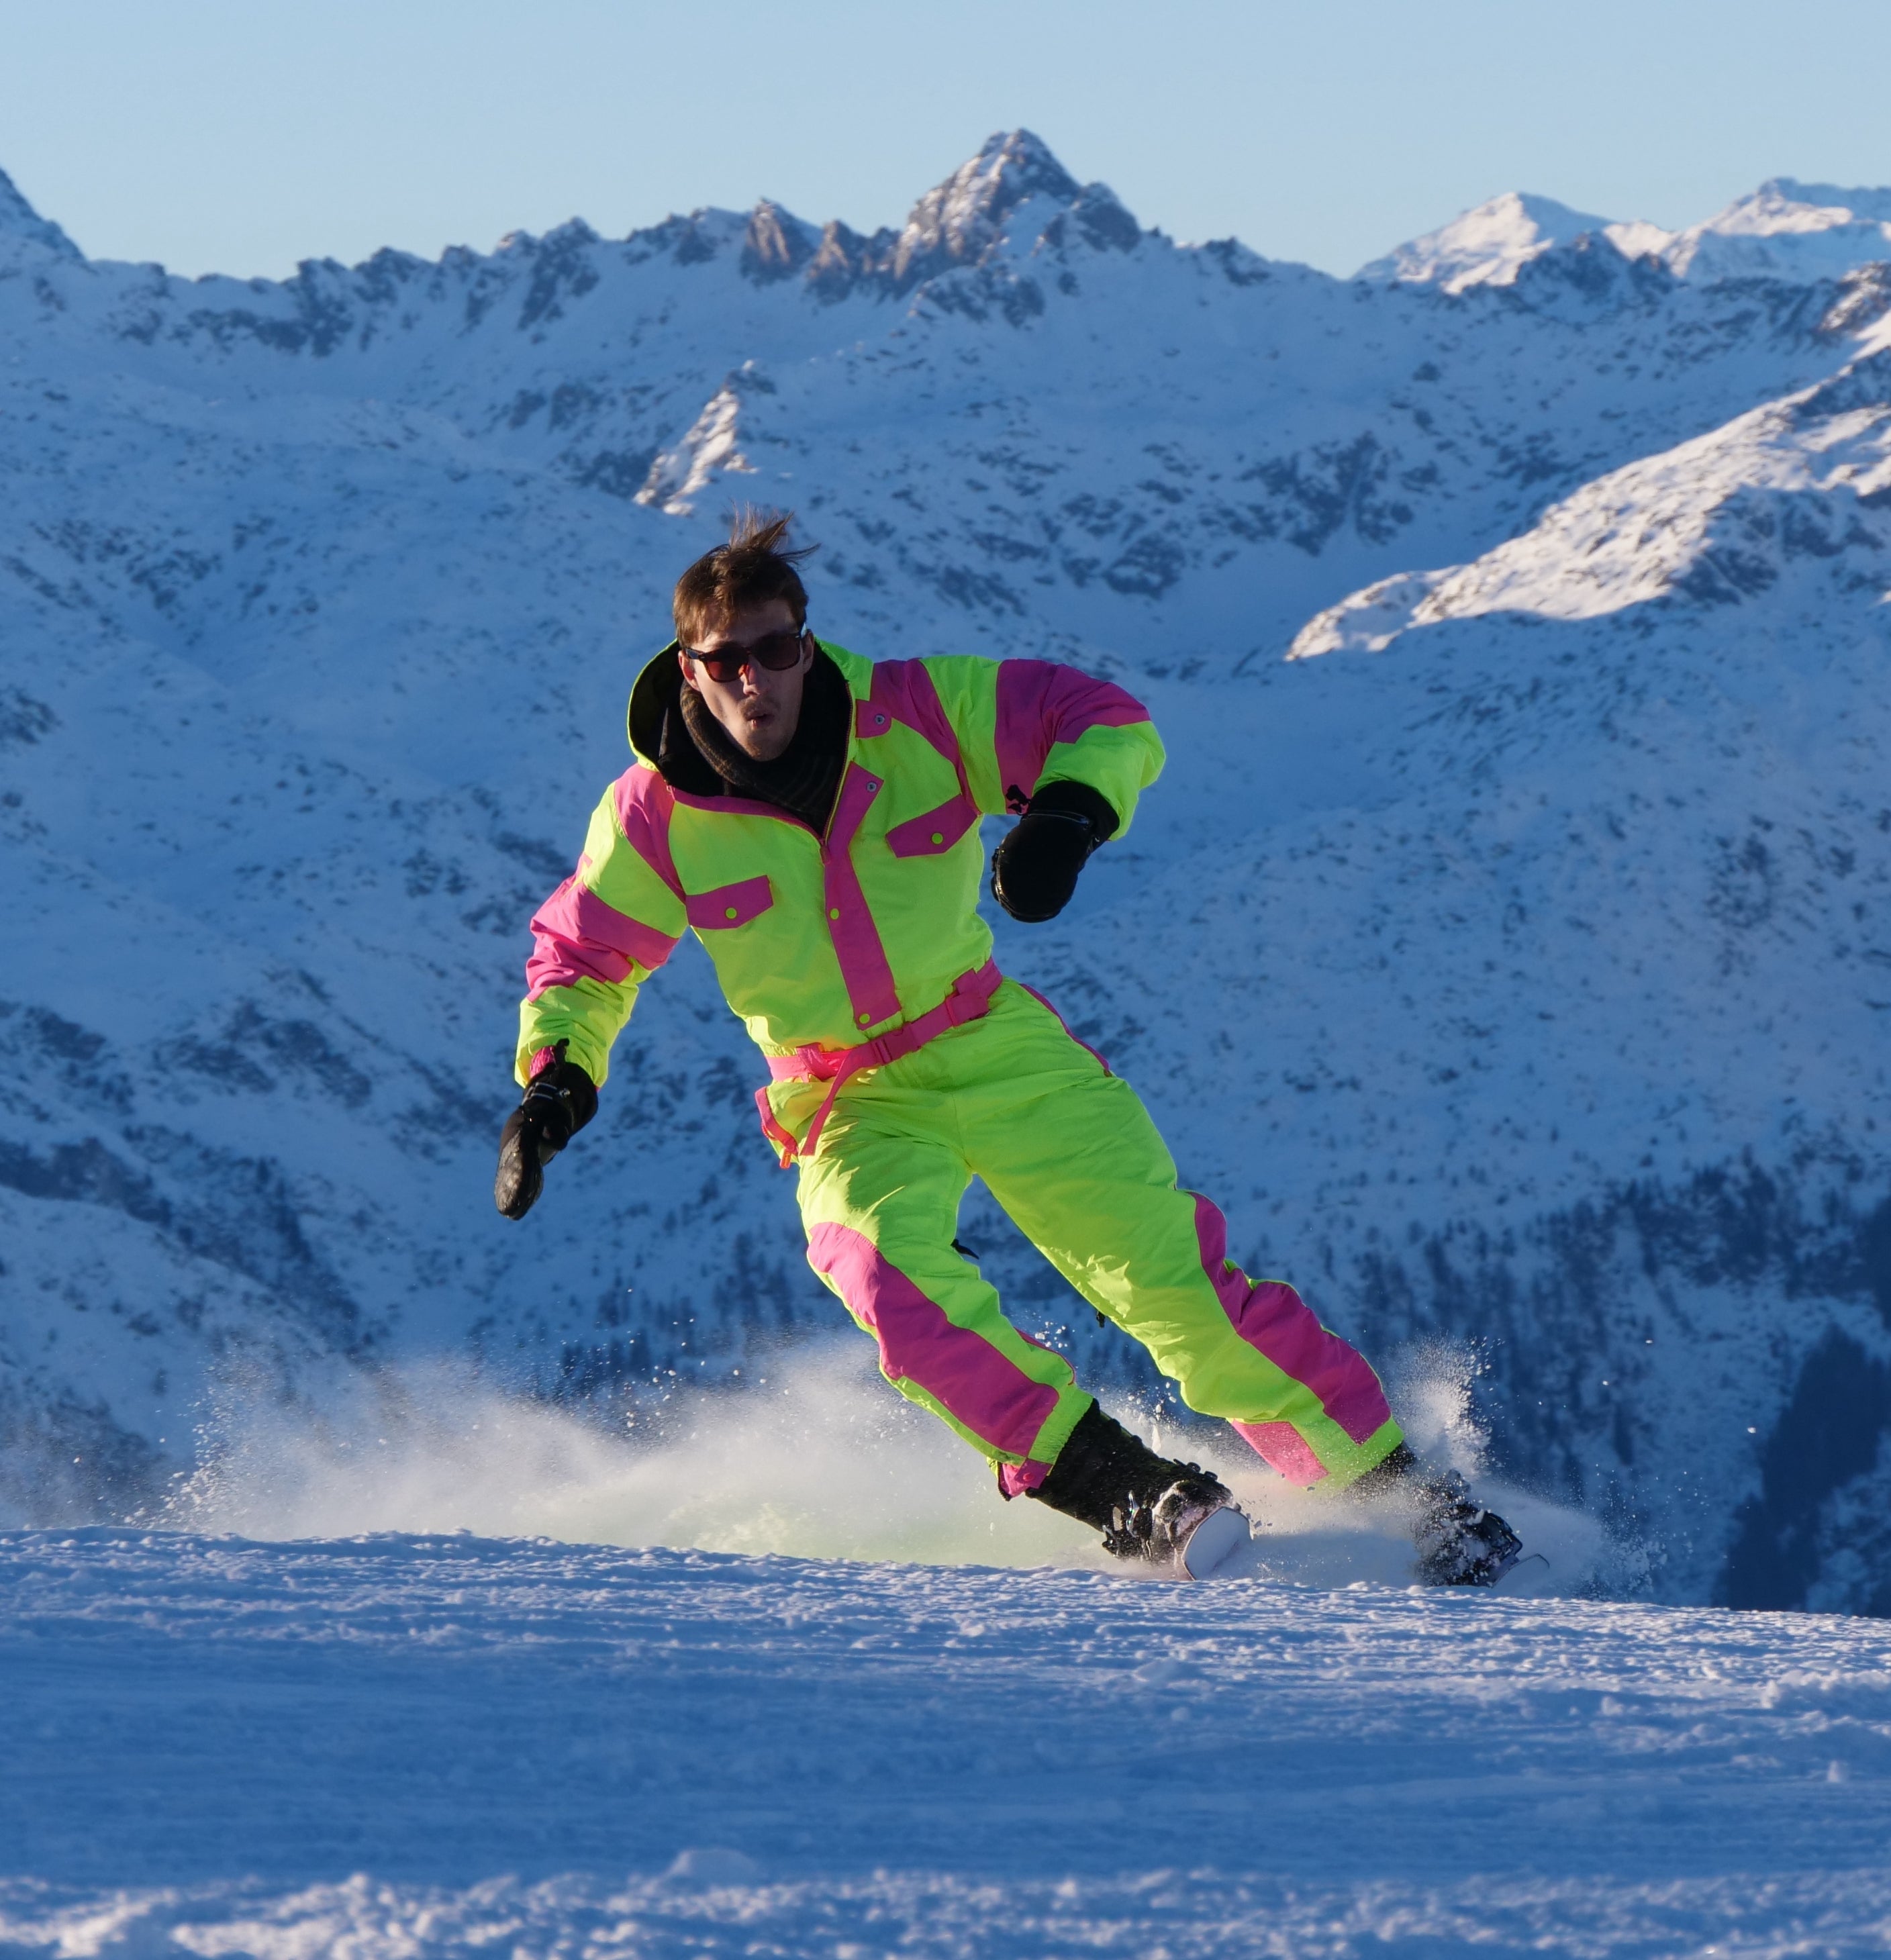 Snowfeet - Skiskates, Snowblades | Official Website | Price $199.90